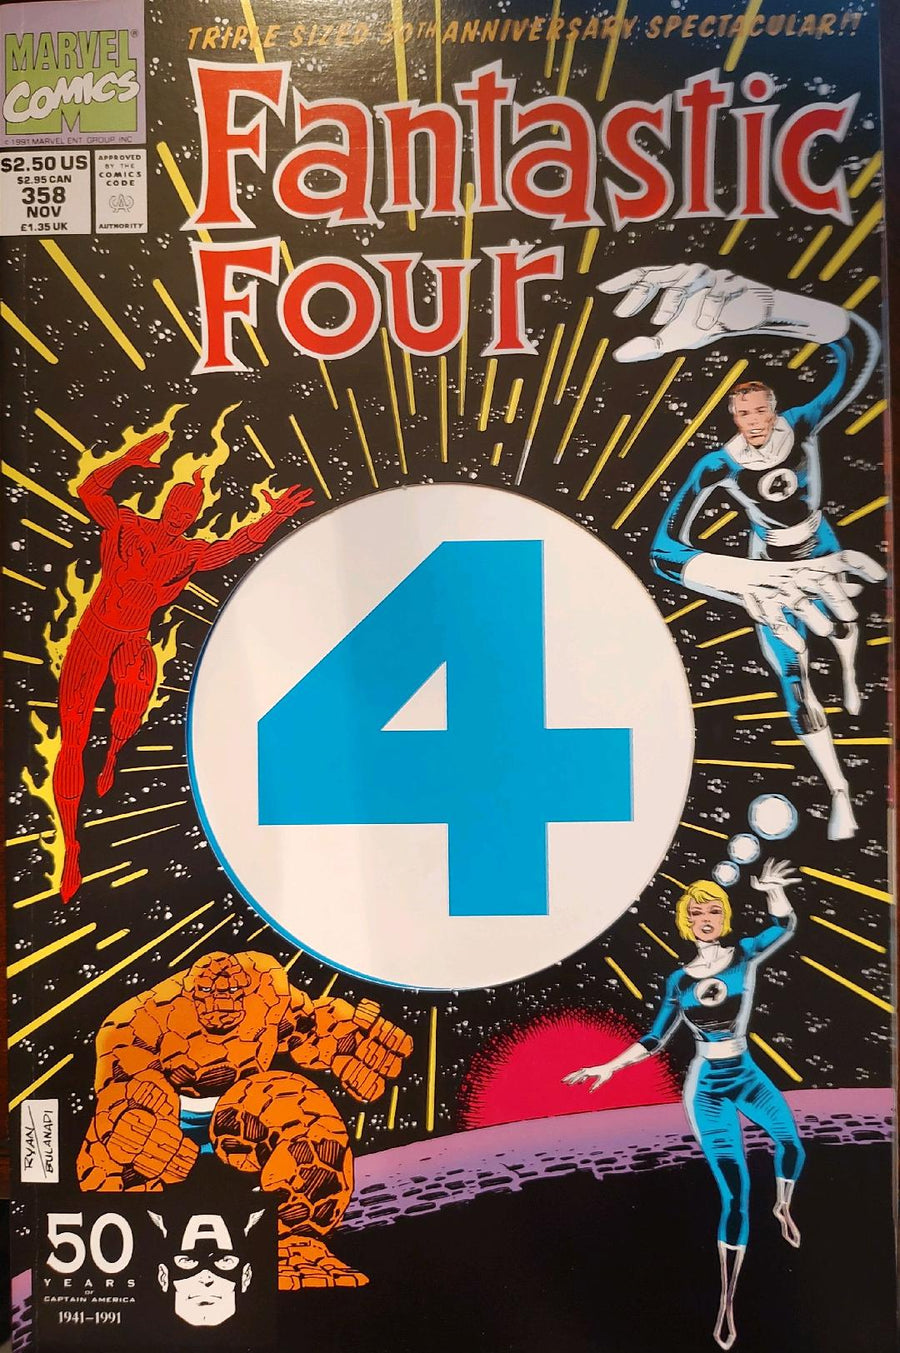 Fantastic Four #358 Comic Book Cover